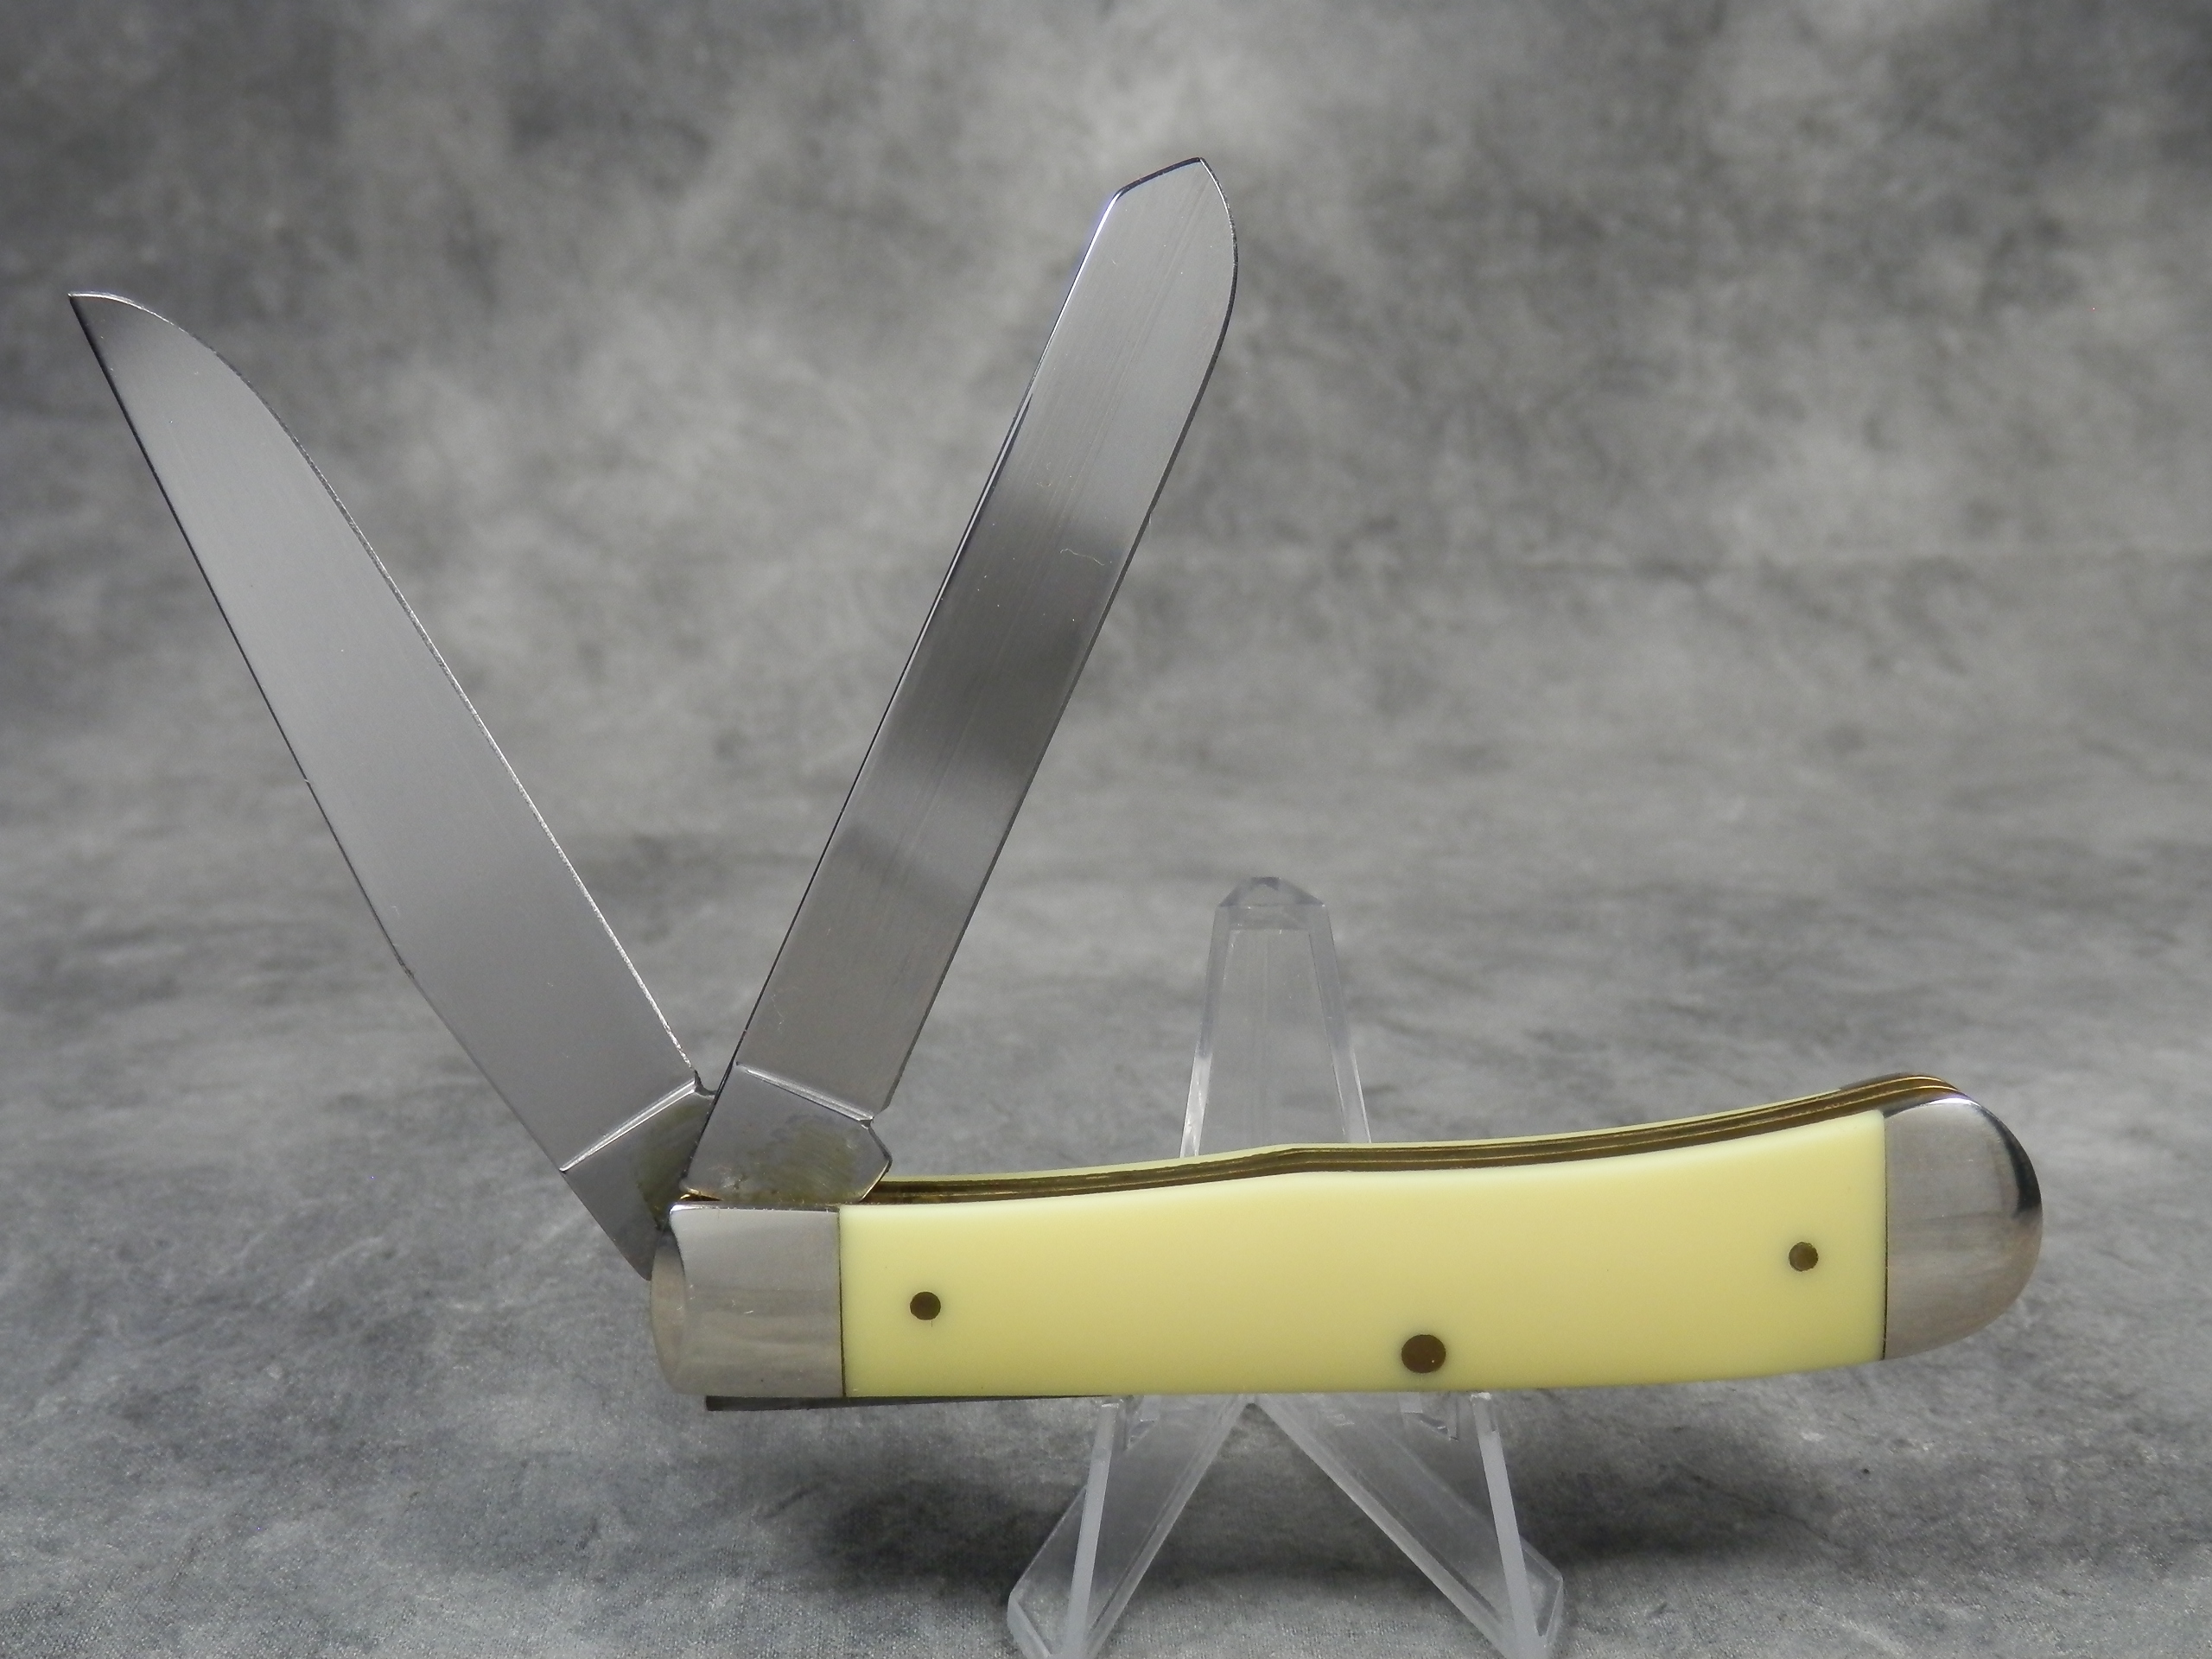 1997 case xx usa 3254 cv yellow trapper pocket knife current market value